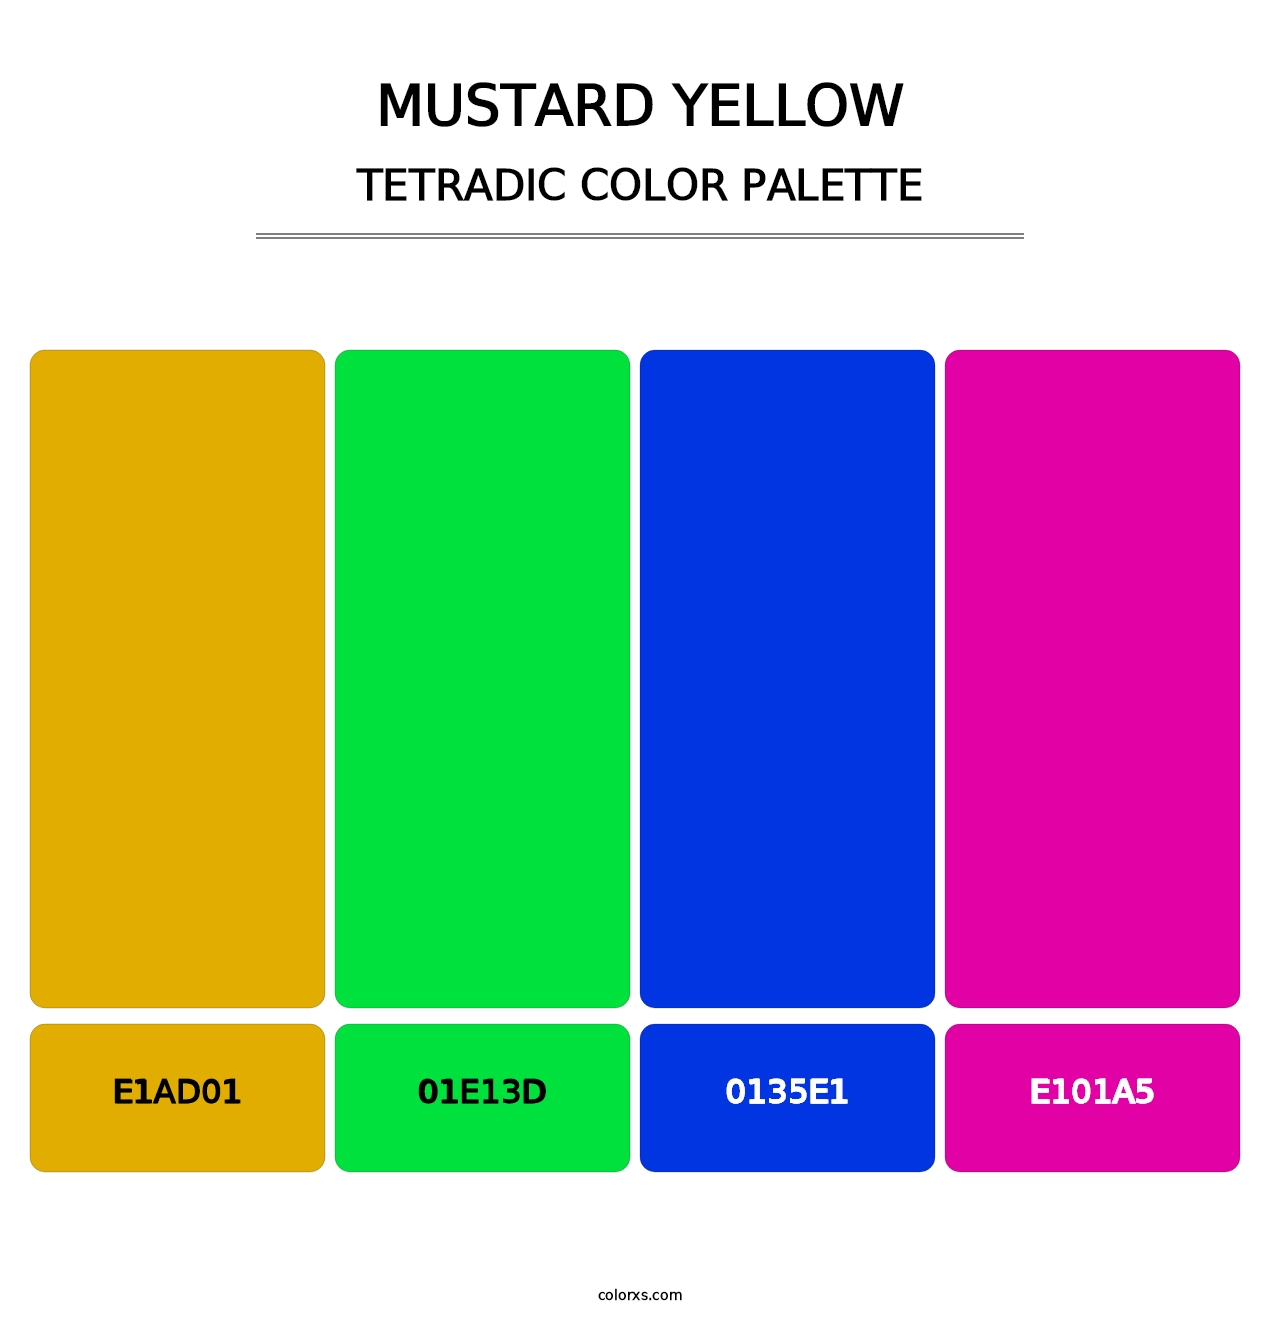 Mustard Yellow - Tetradic Color Palette